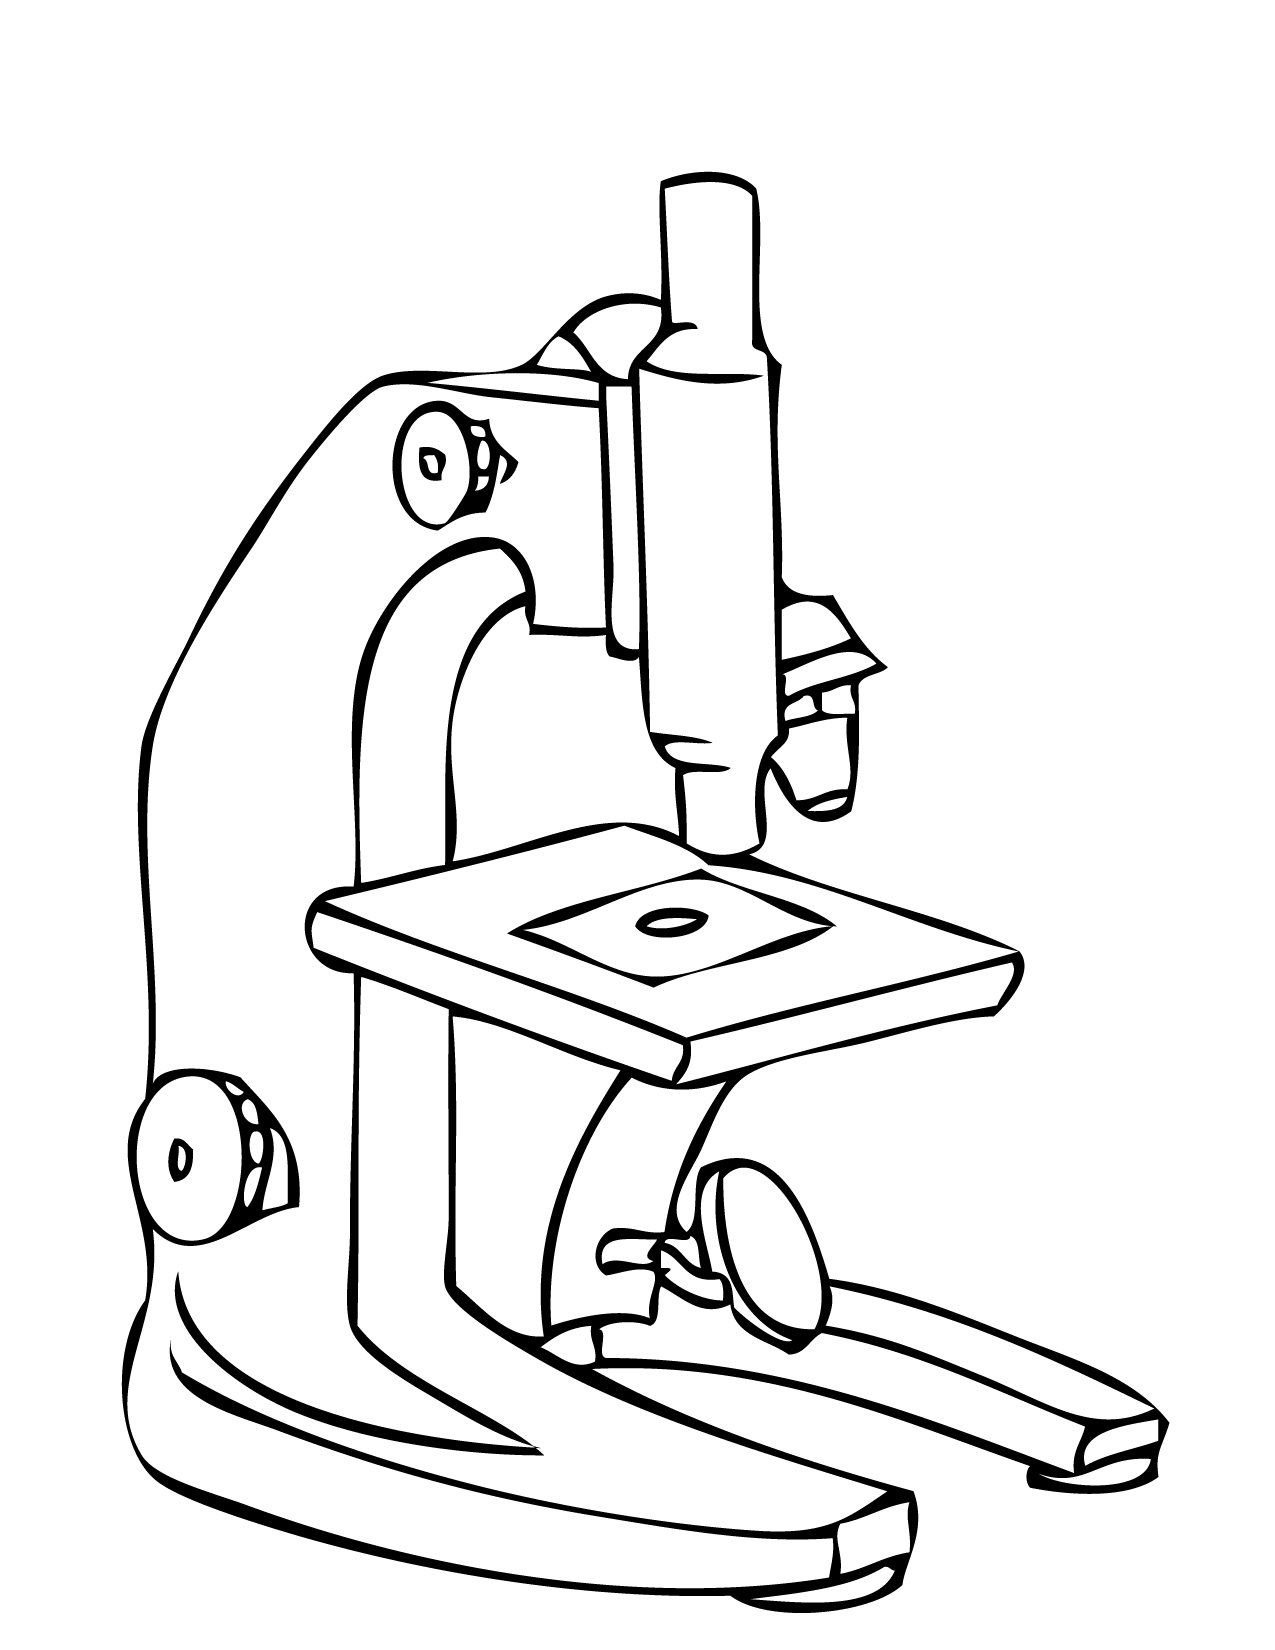 Simple microscope clipart.